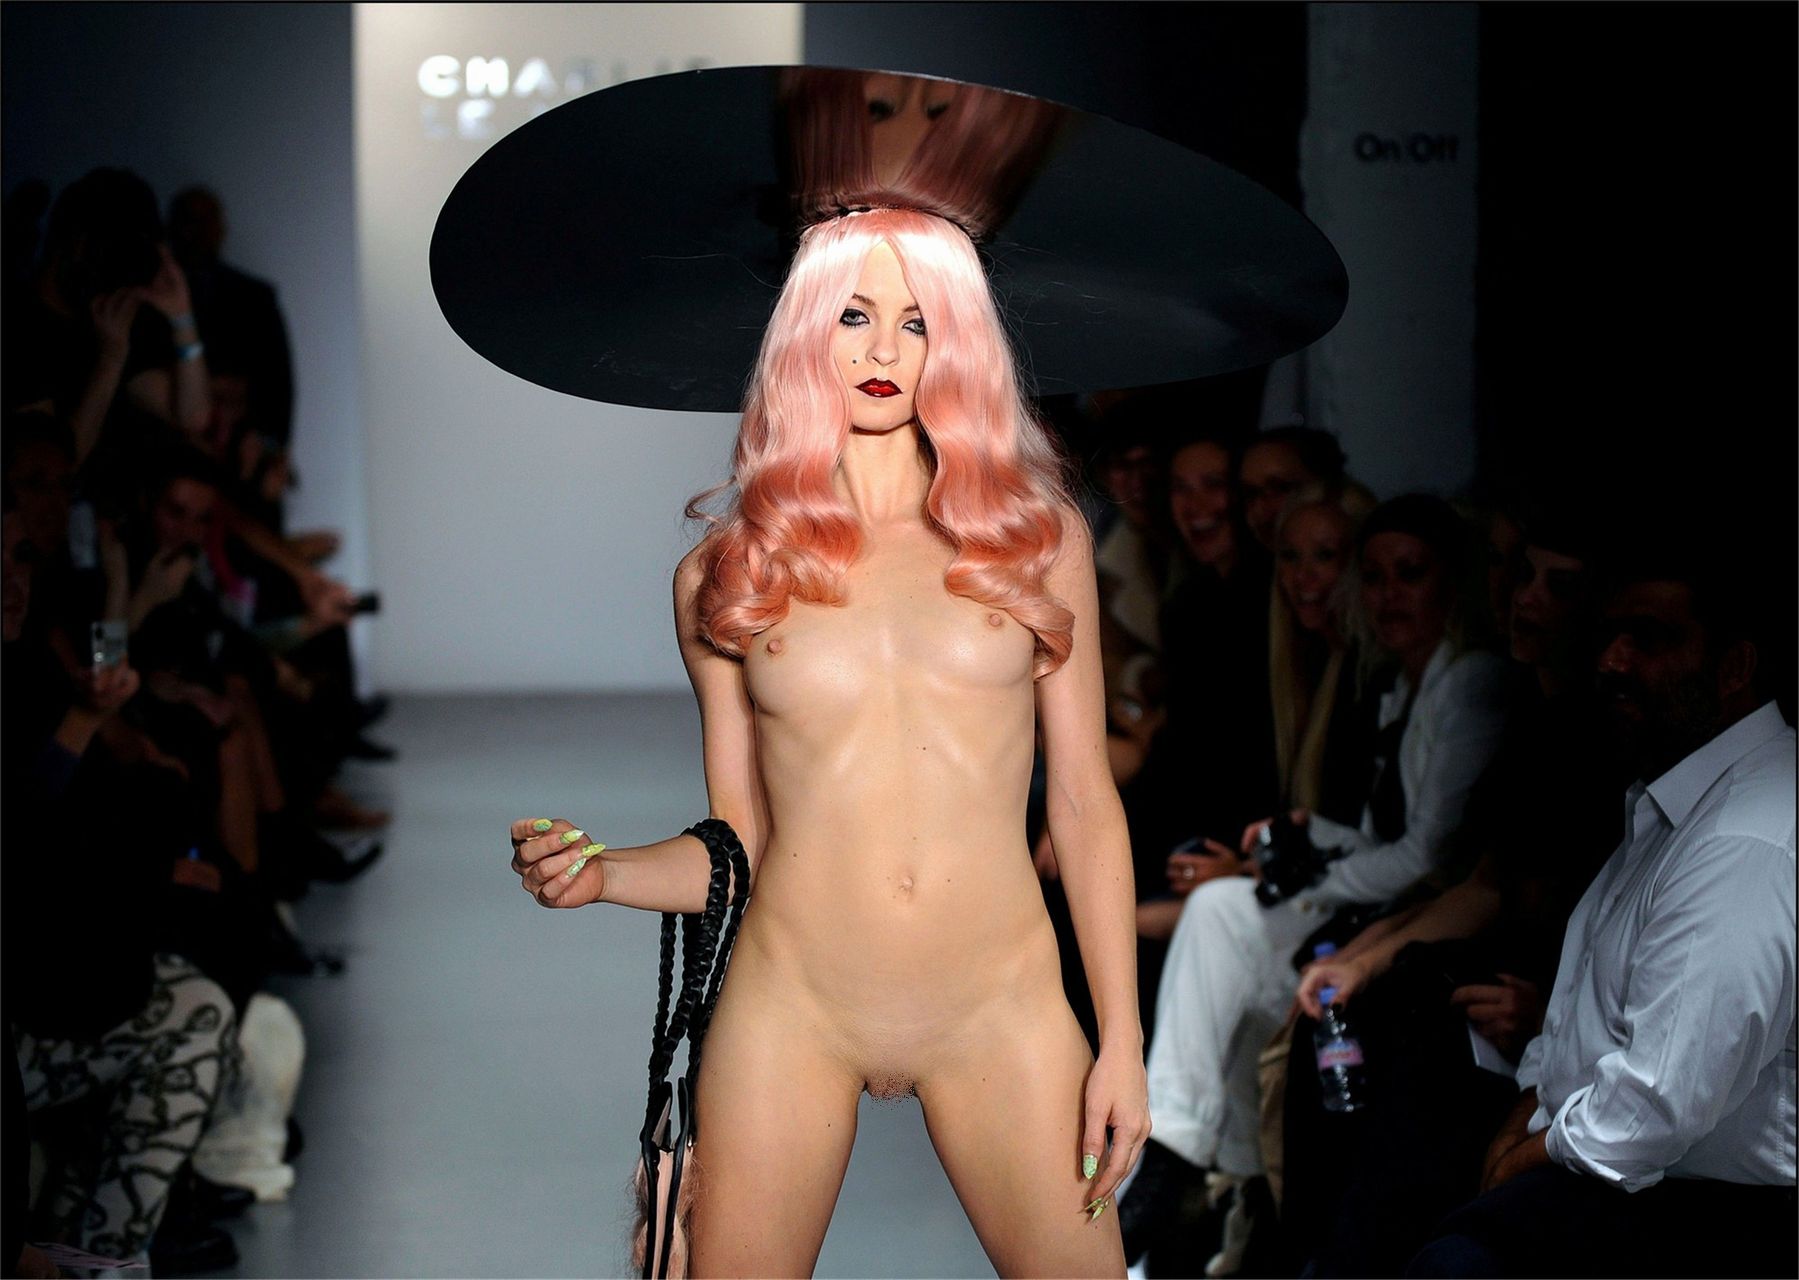 Nudist Fashion - Woman who got nude in fashion shows.